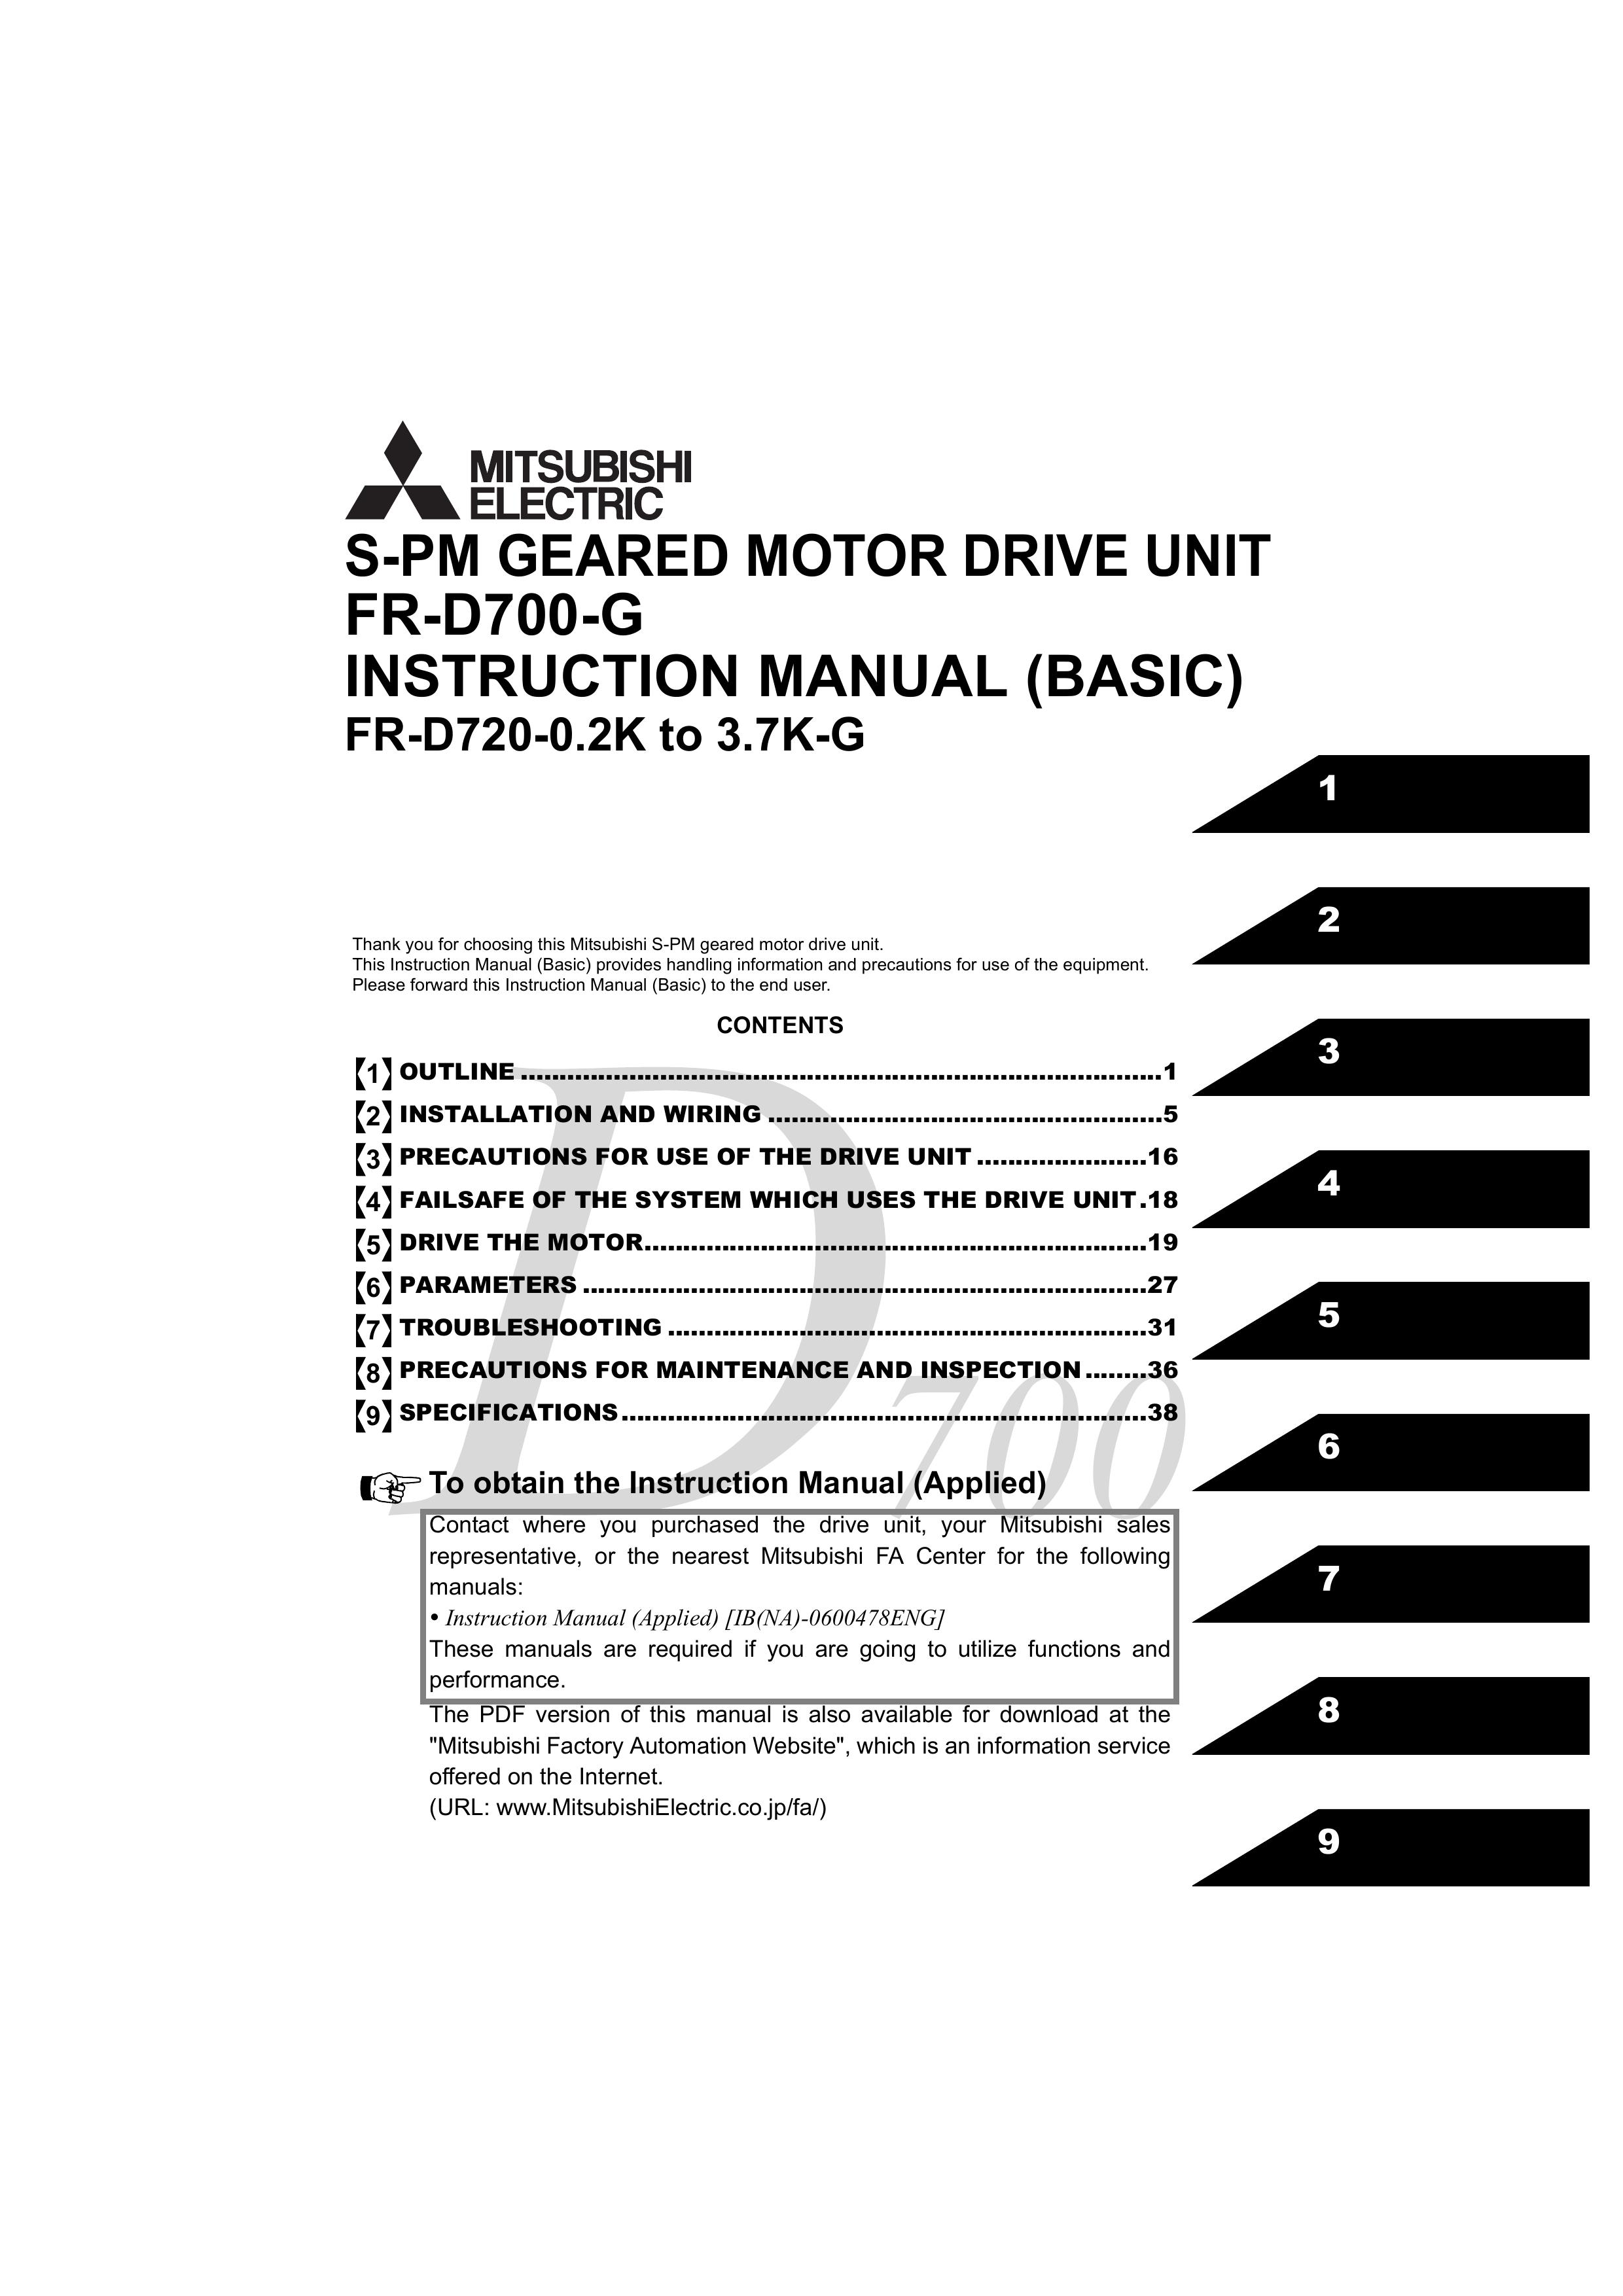 Mitsubishi Electronics FR-D700-G Outboard Motor User Manual